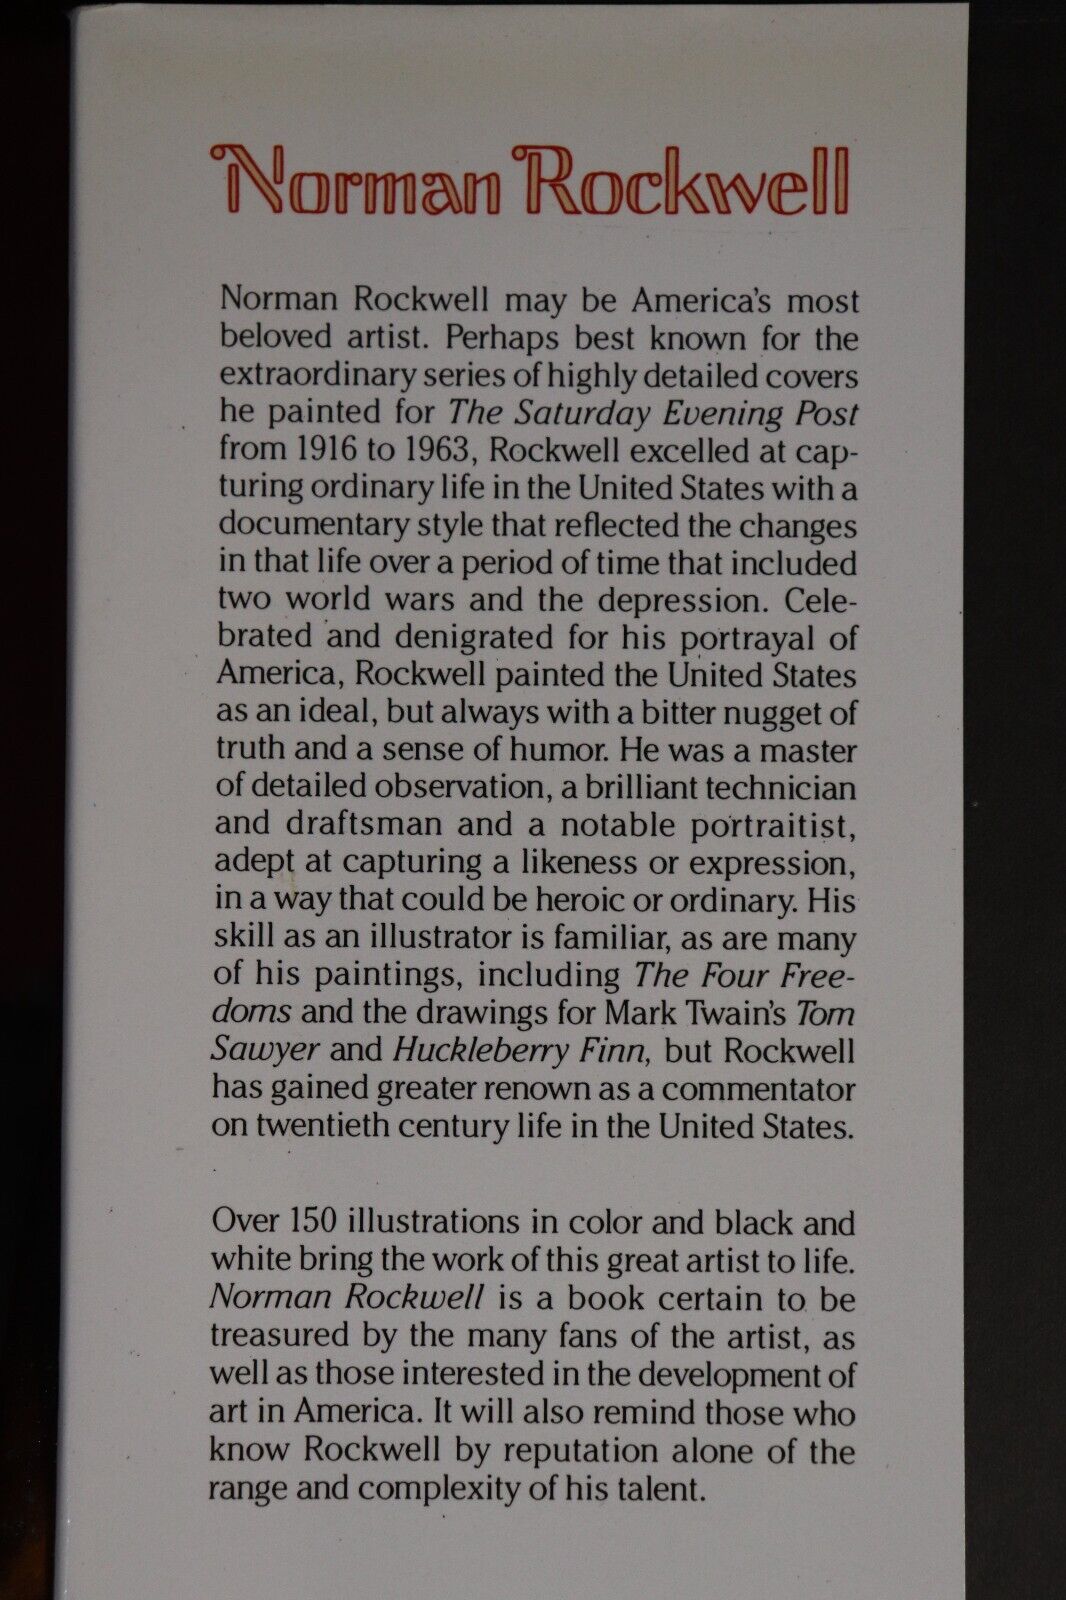 Norman Rockwell by Elizabeth Montgomery - 1989 - American Art Book